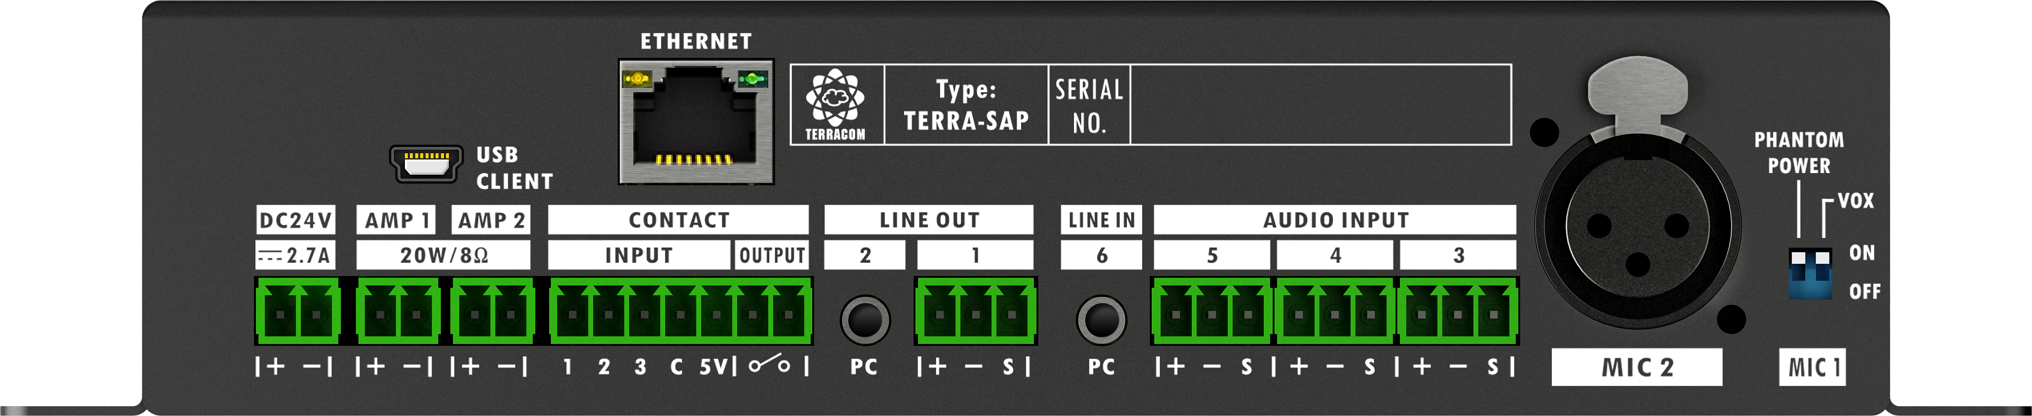 TERRA-SAP - Mini processeur audio DSP - TERRACOM